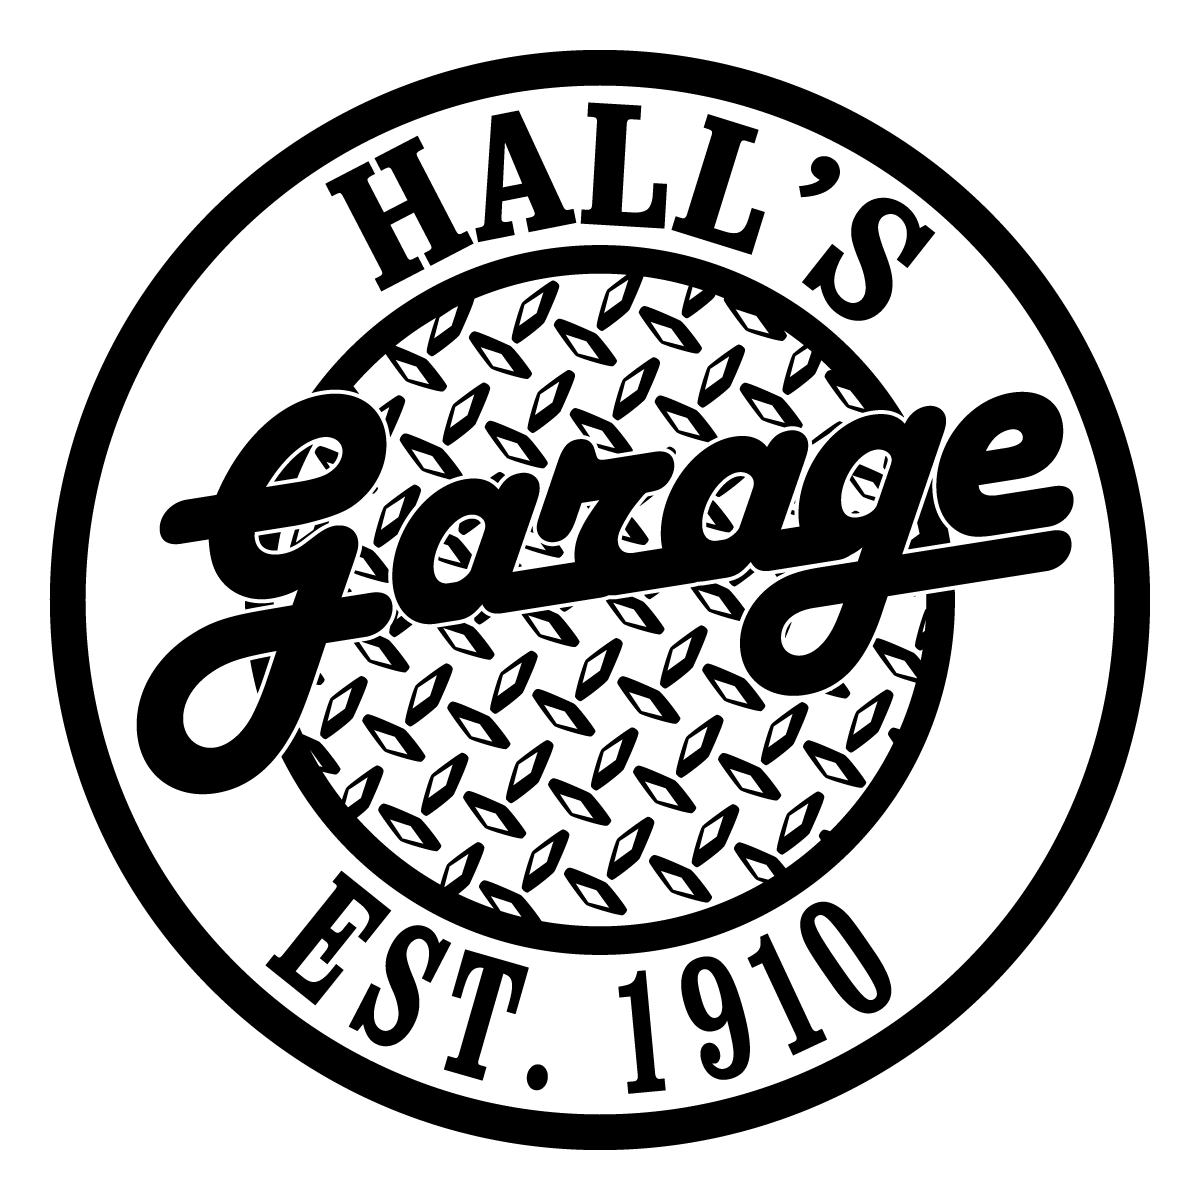 Hall's Garage